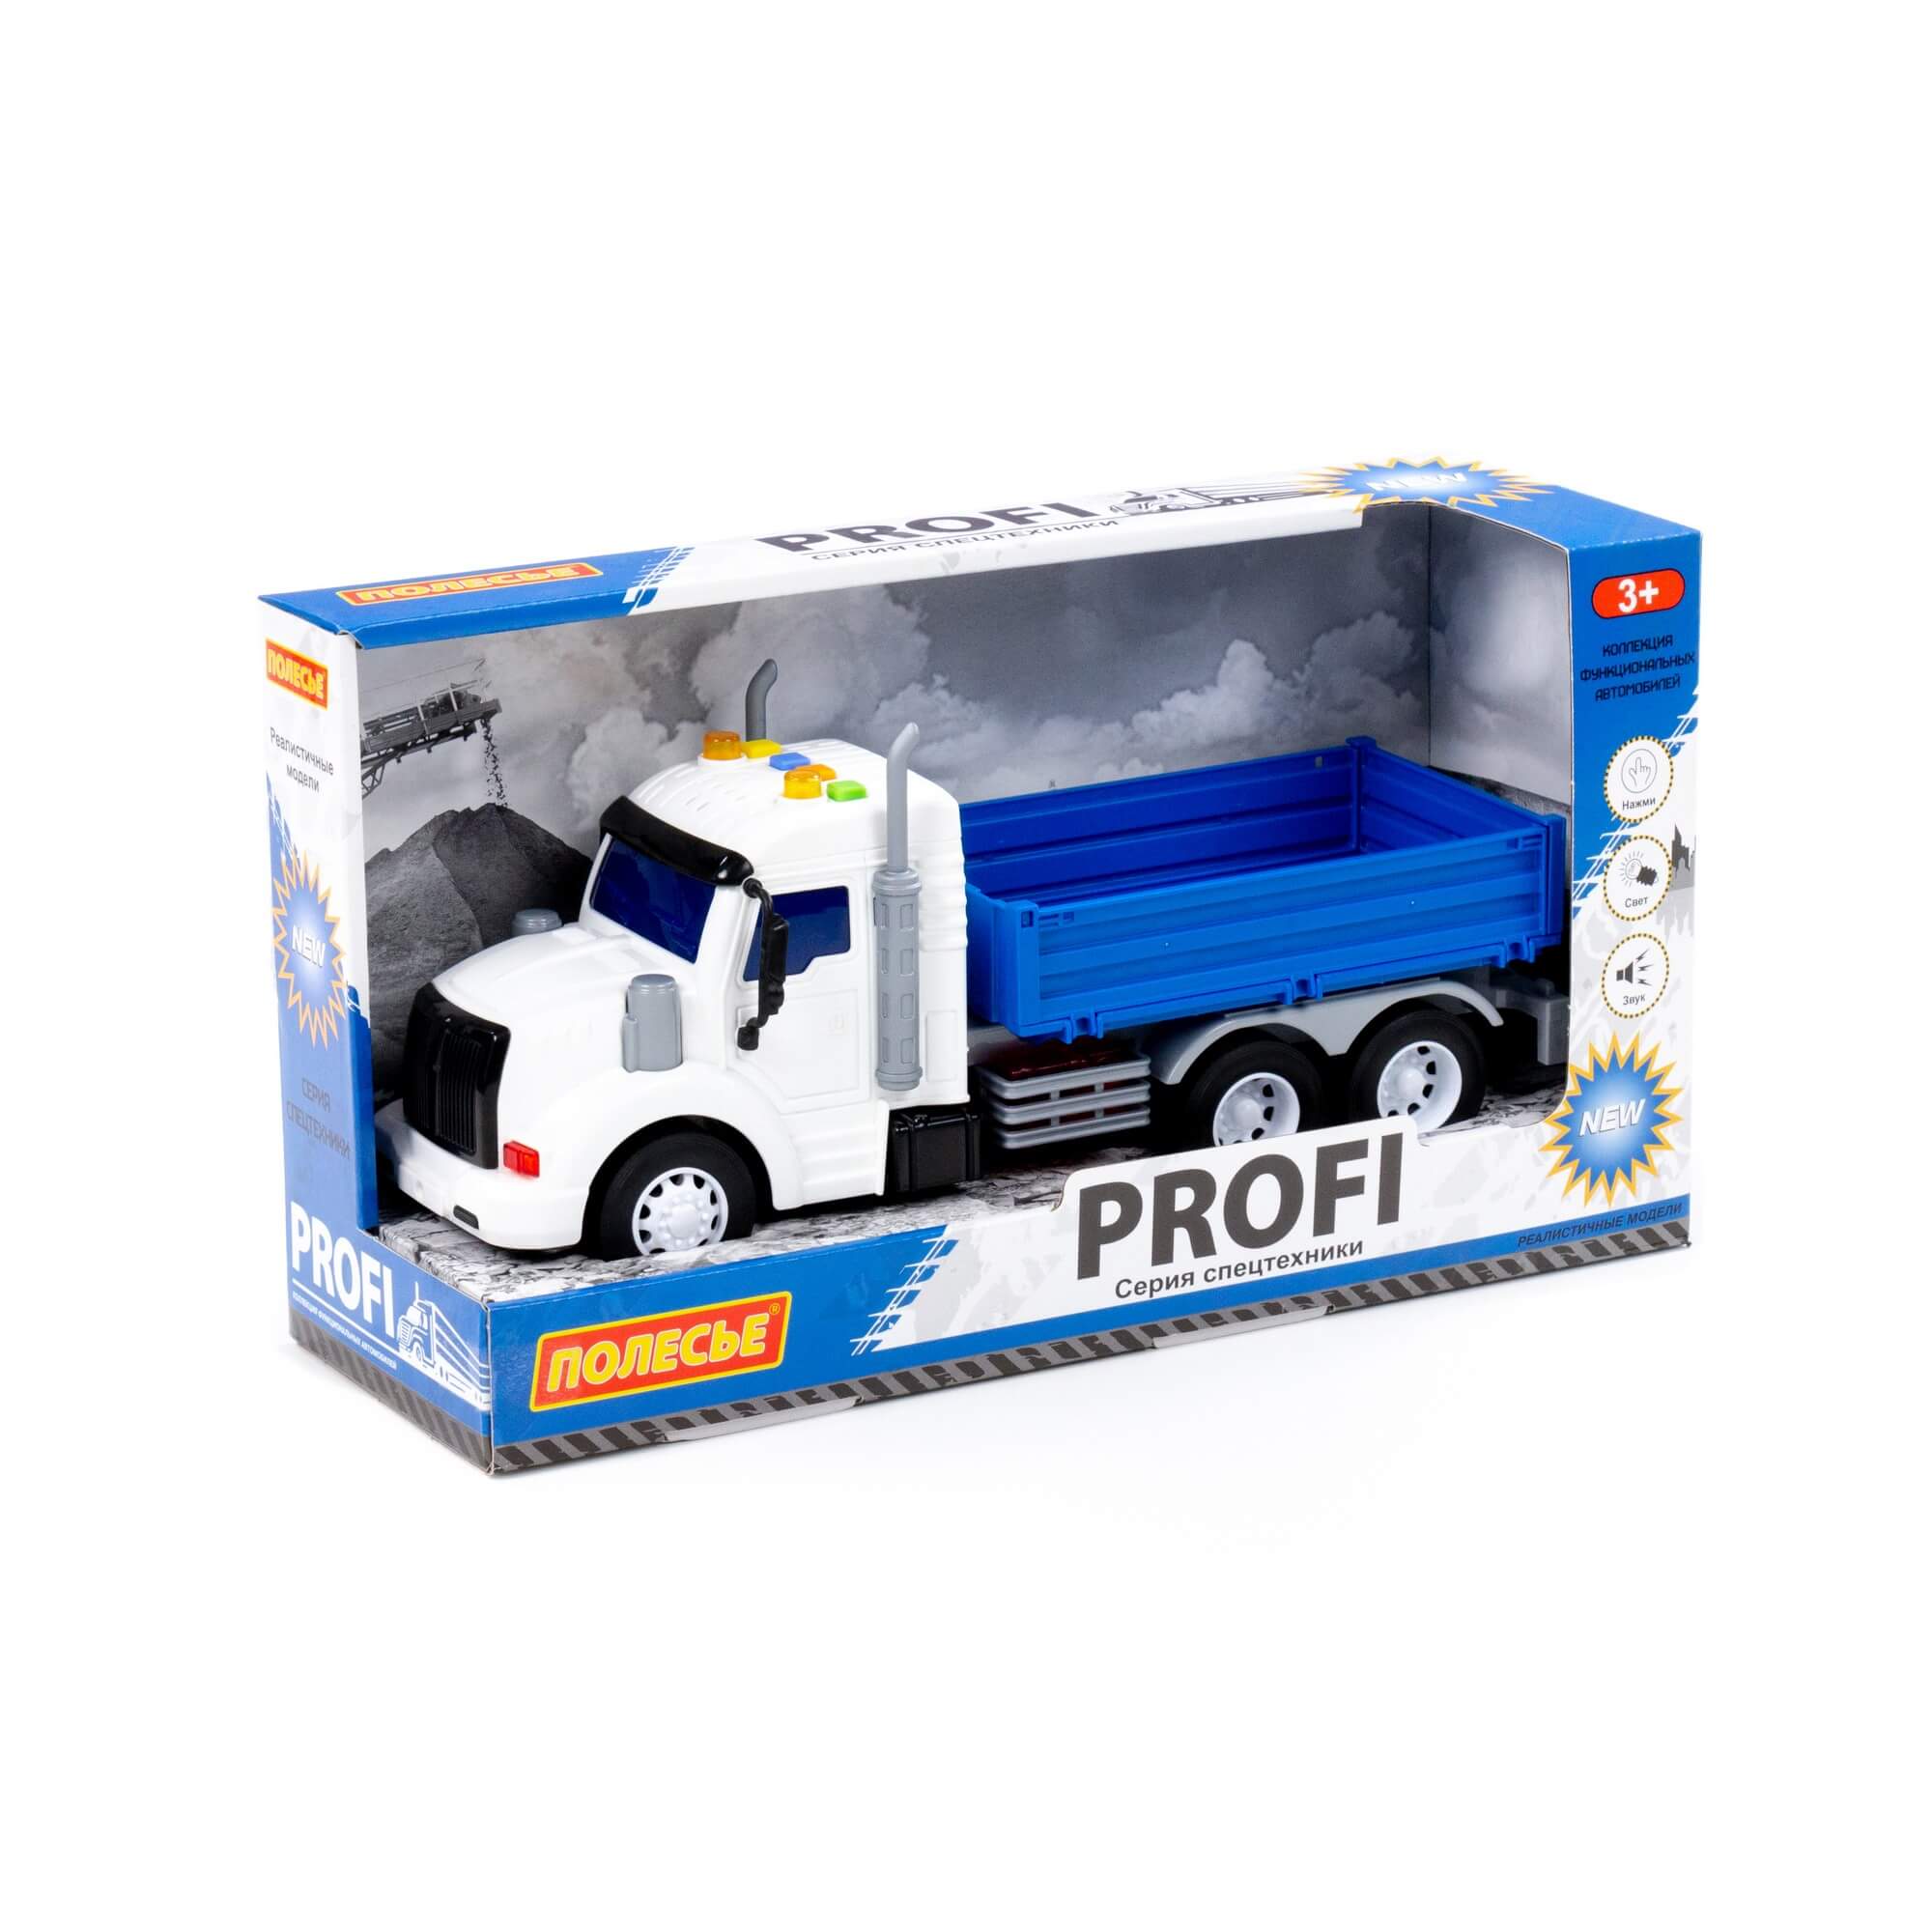 Profi drop-side truck (box)